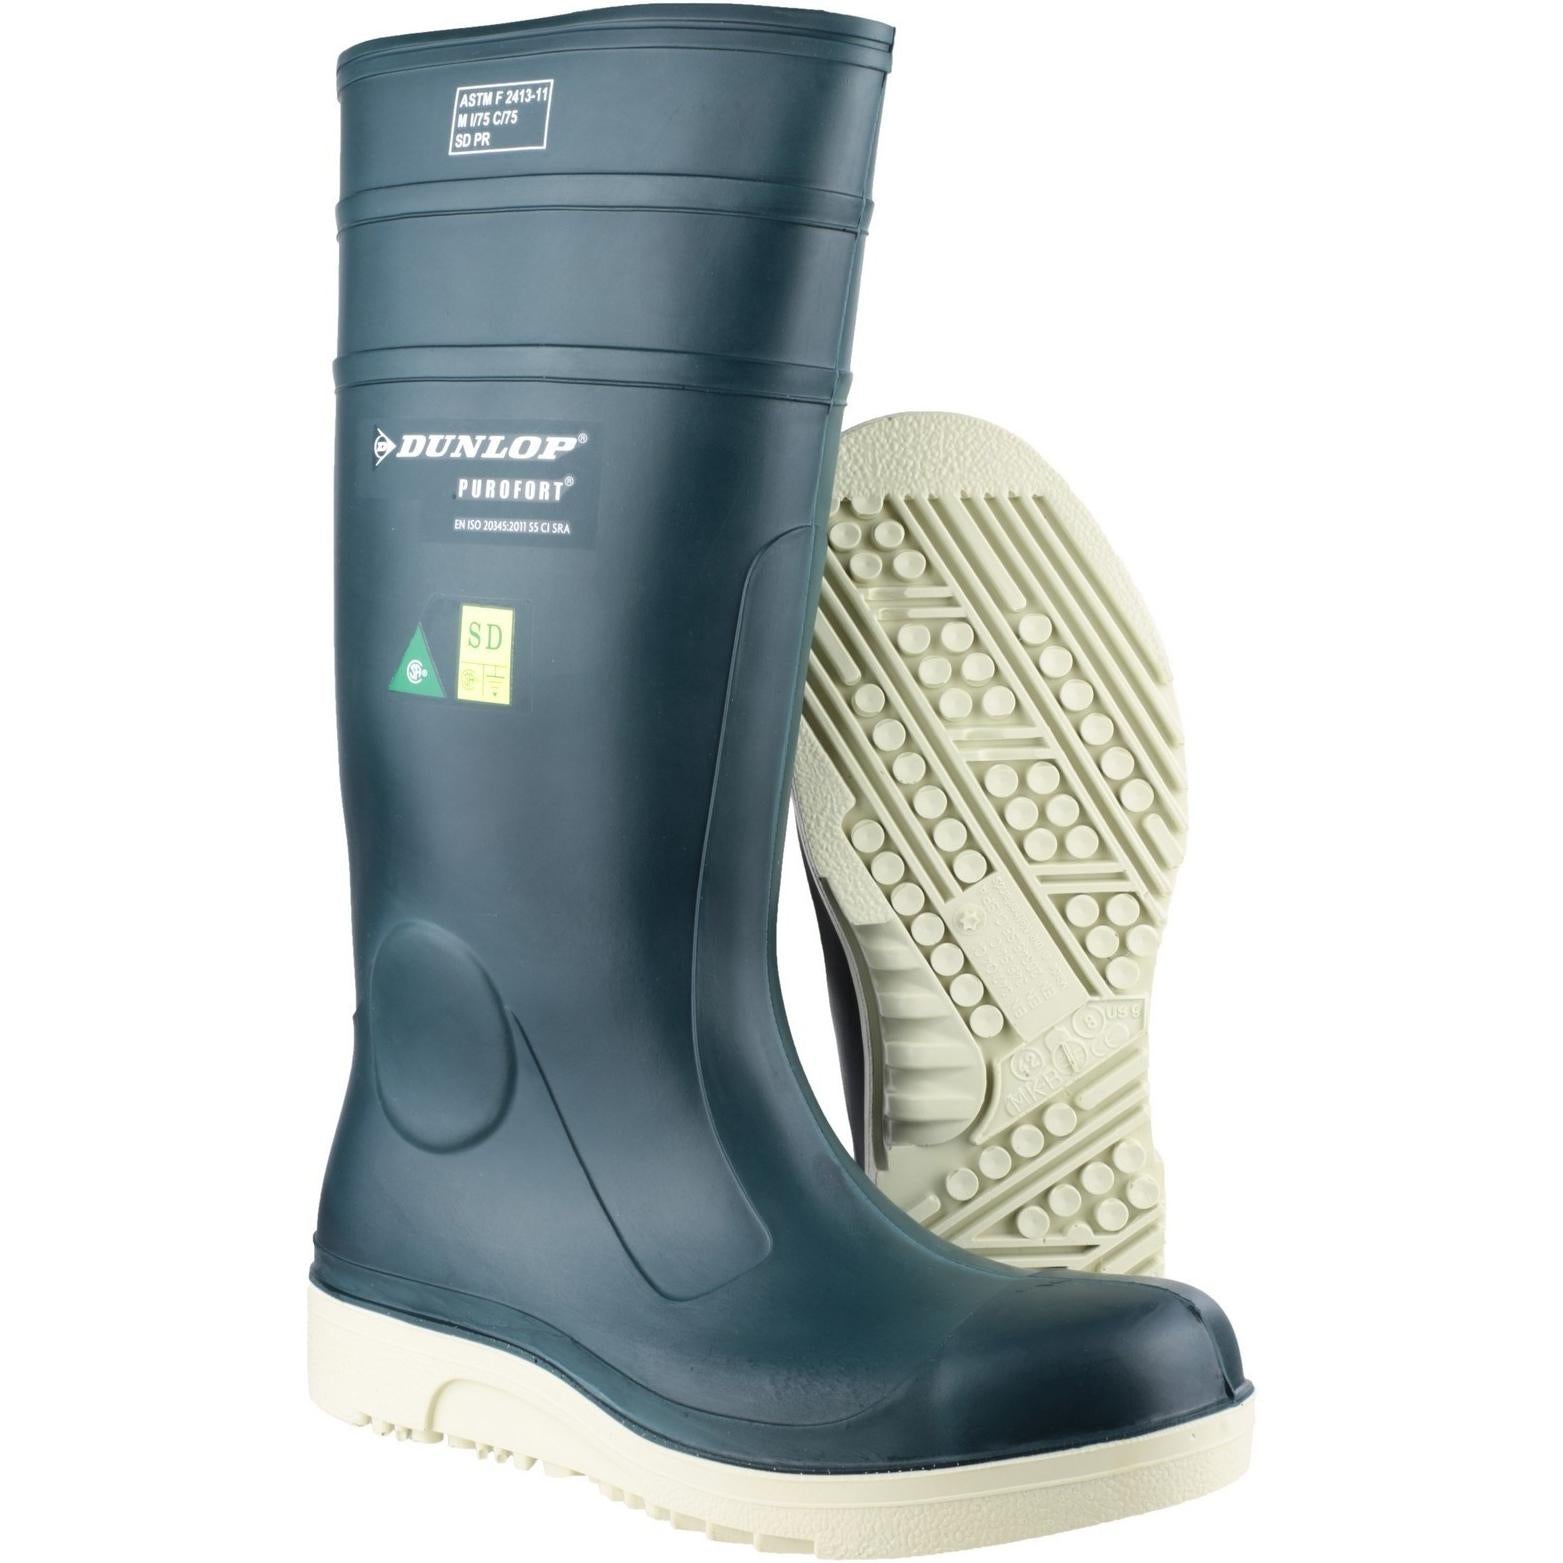 Dunlop Purofort Comfort Grip Full Safety Wellington Boots